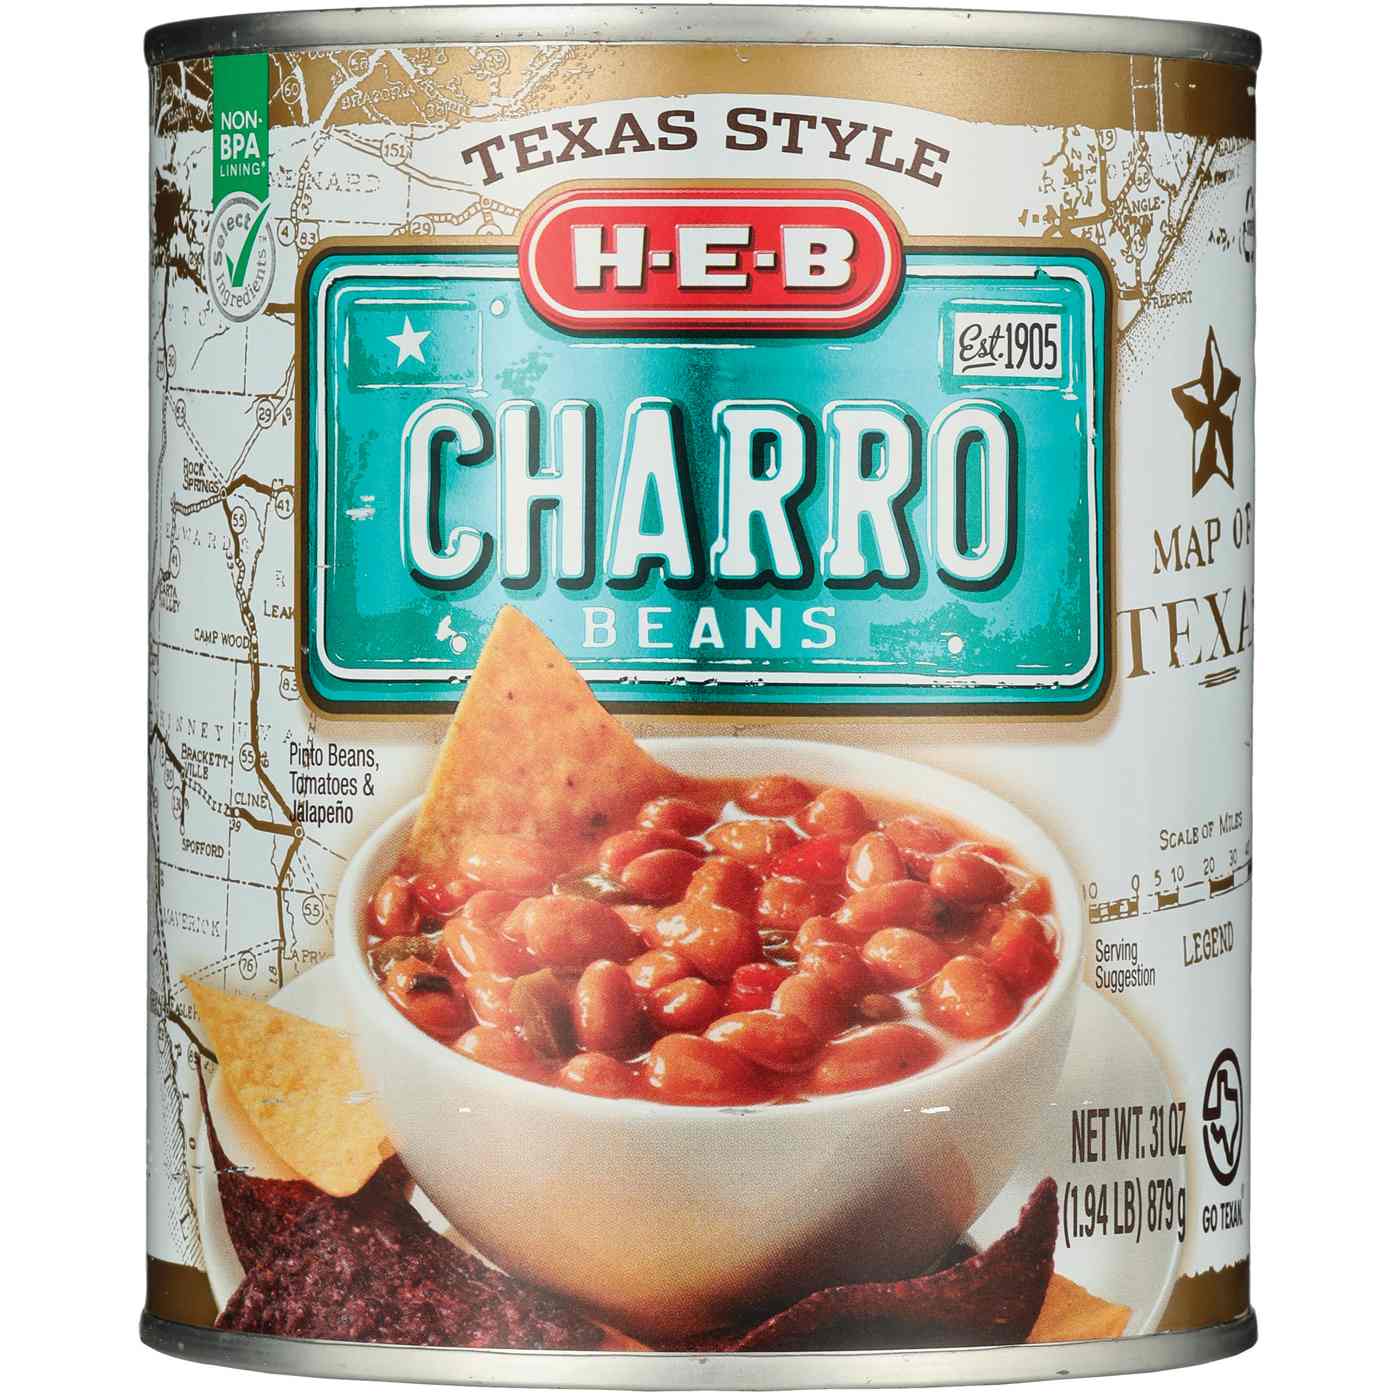 H-E-B Texas Style Charro Beans; image 1 of 2